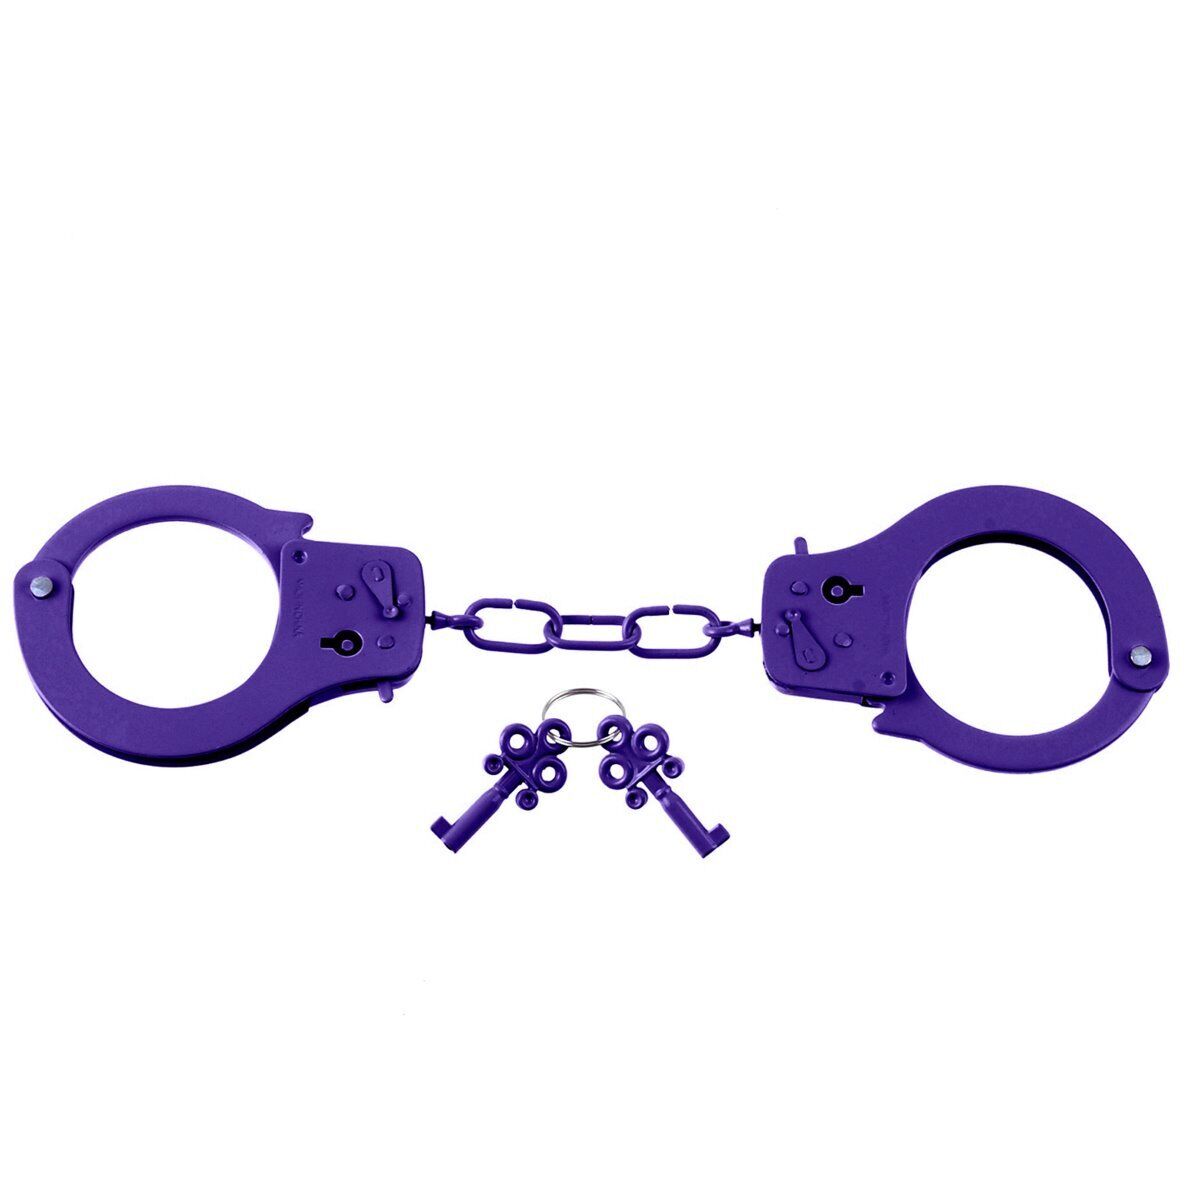 Purple Steel Metal Handcuffs Restraints Wrist Cuffs Not for Professional Use